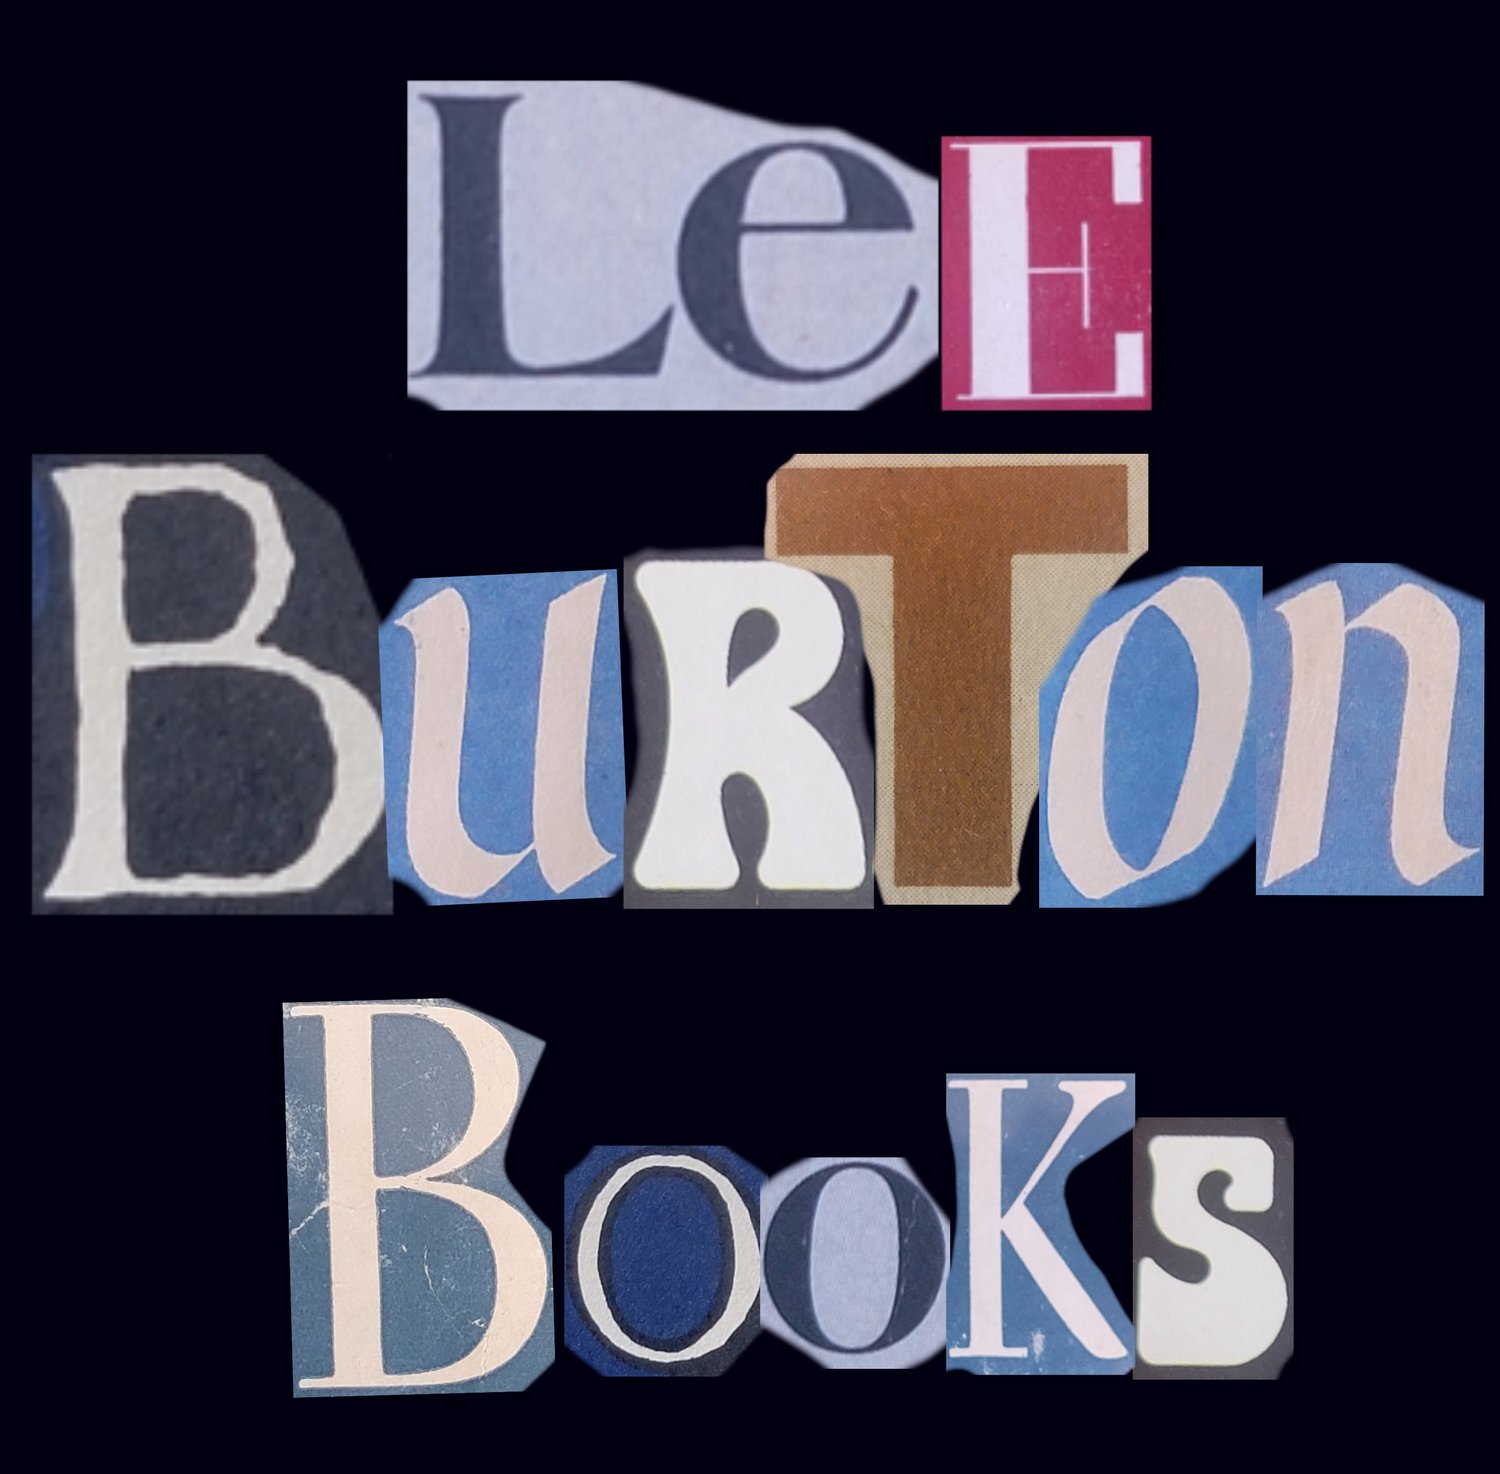 LEE   BURTON  BOOKS